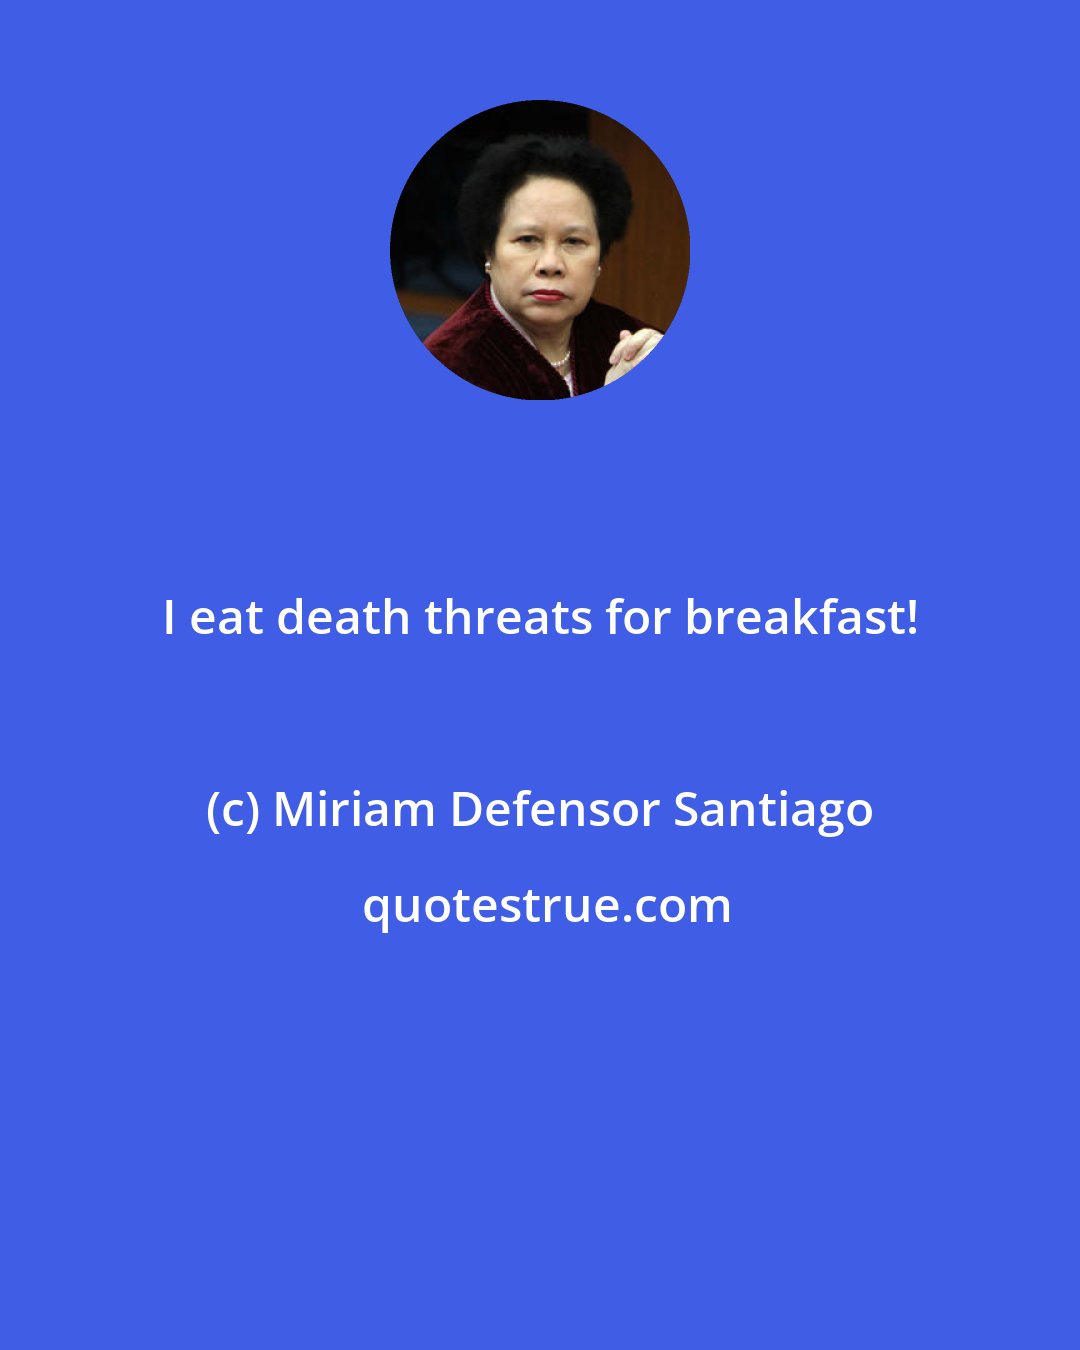 Miriam Defensor Santiago: I eat death threats for breakfast!